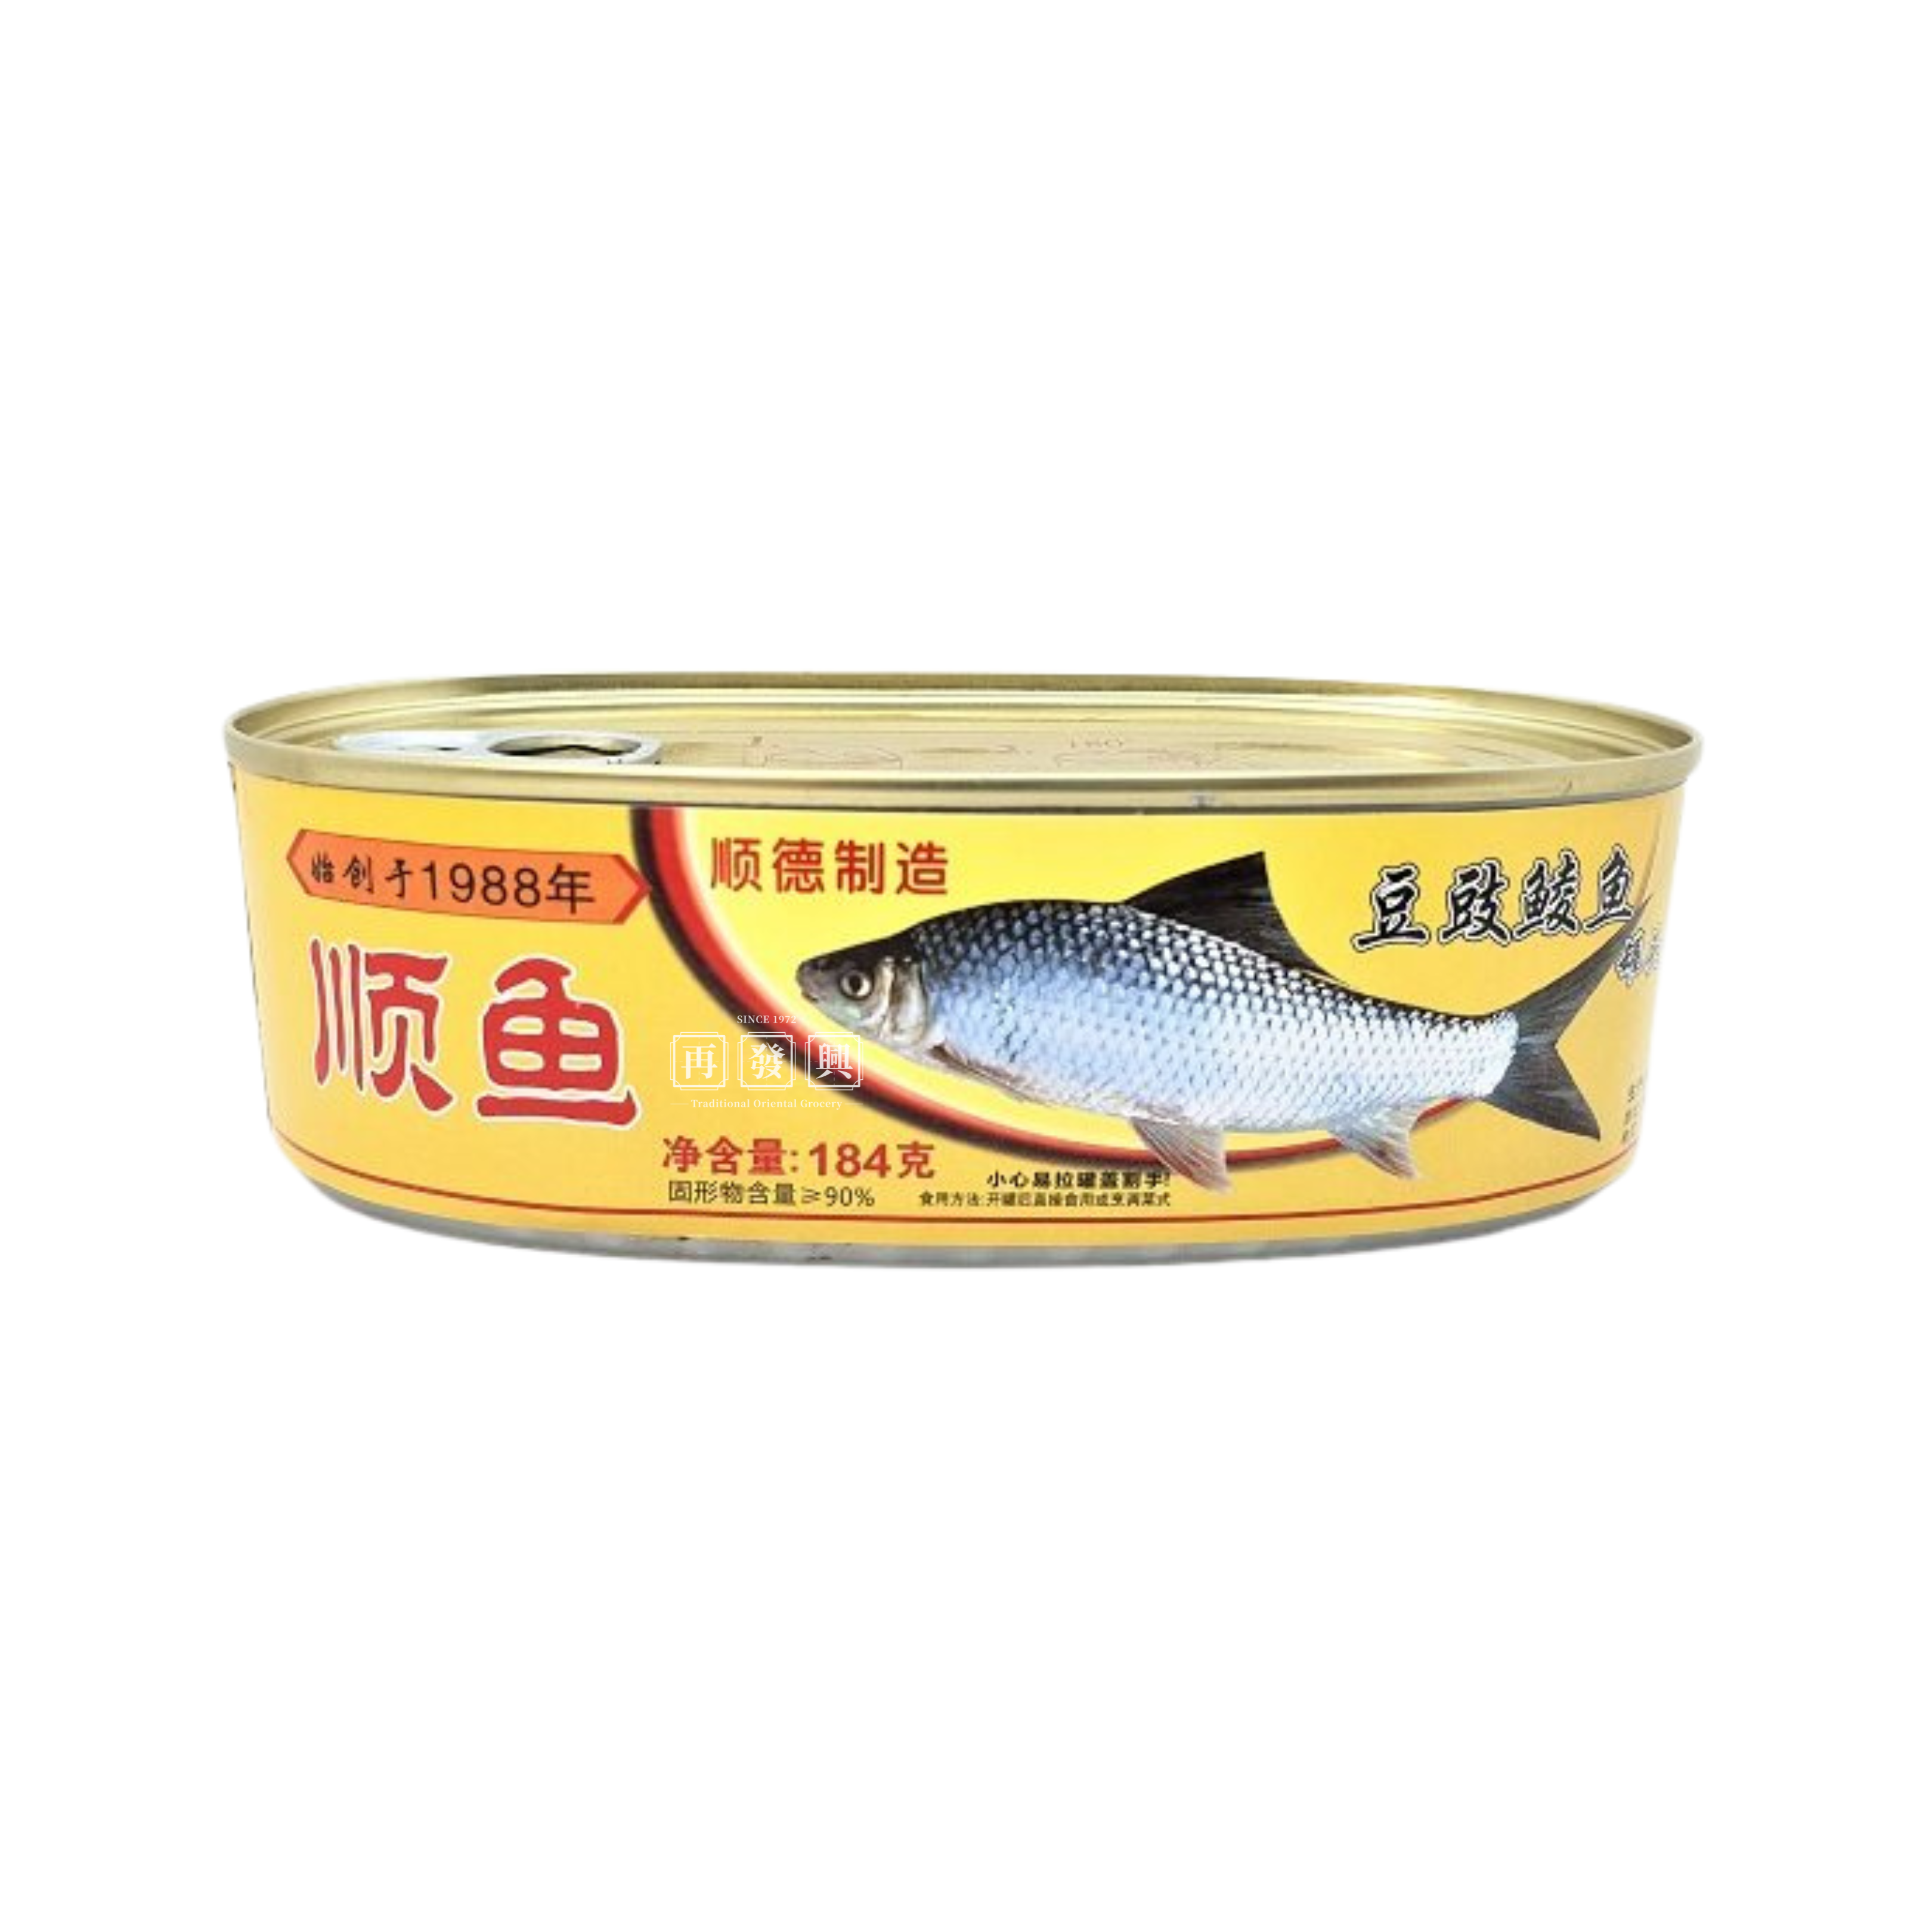 Shun Yu Fried Dace Fish with Black Bean 184g